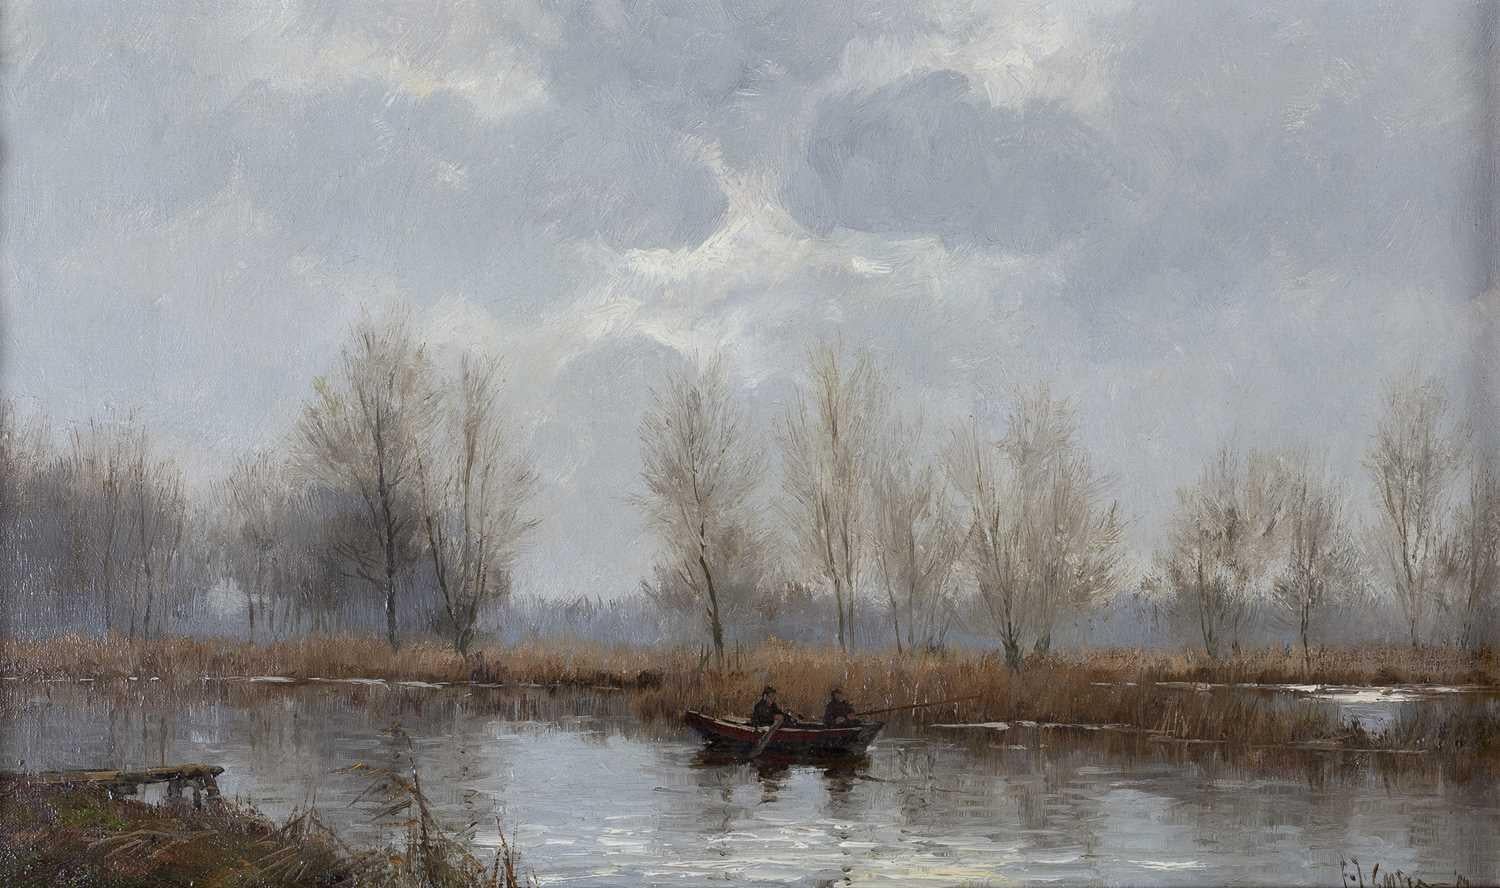 "Fishermen in a Boat on River"